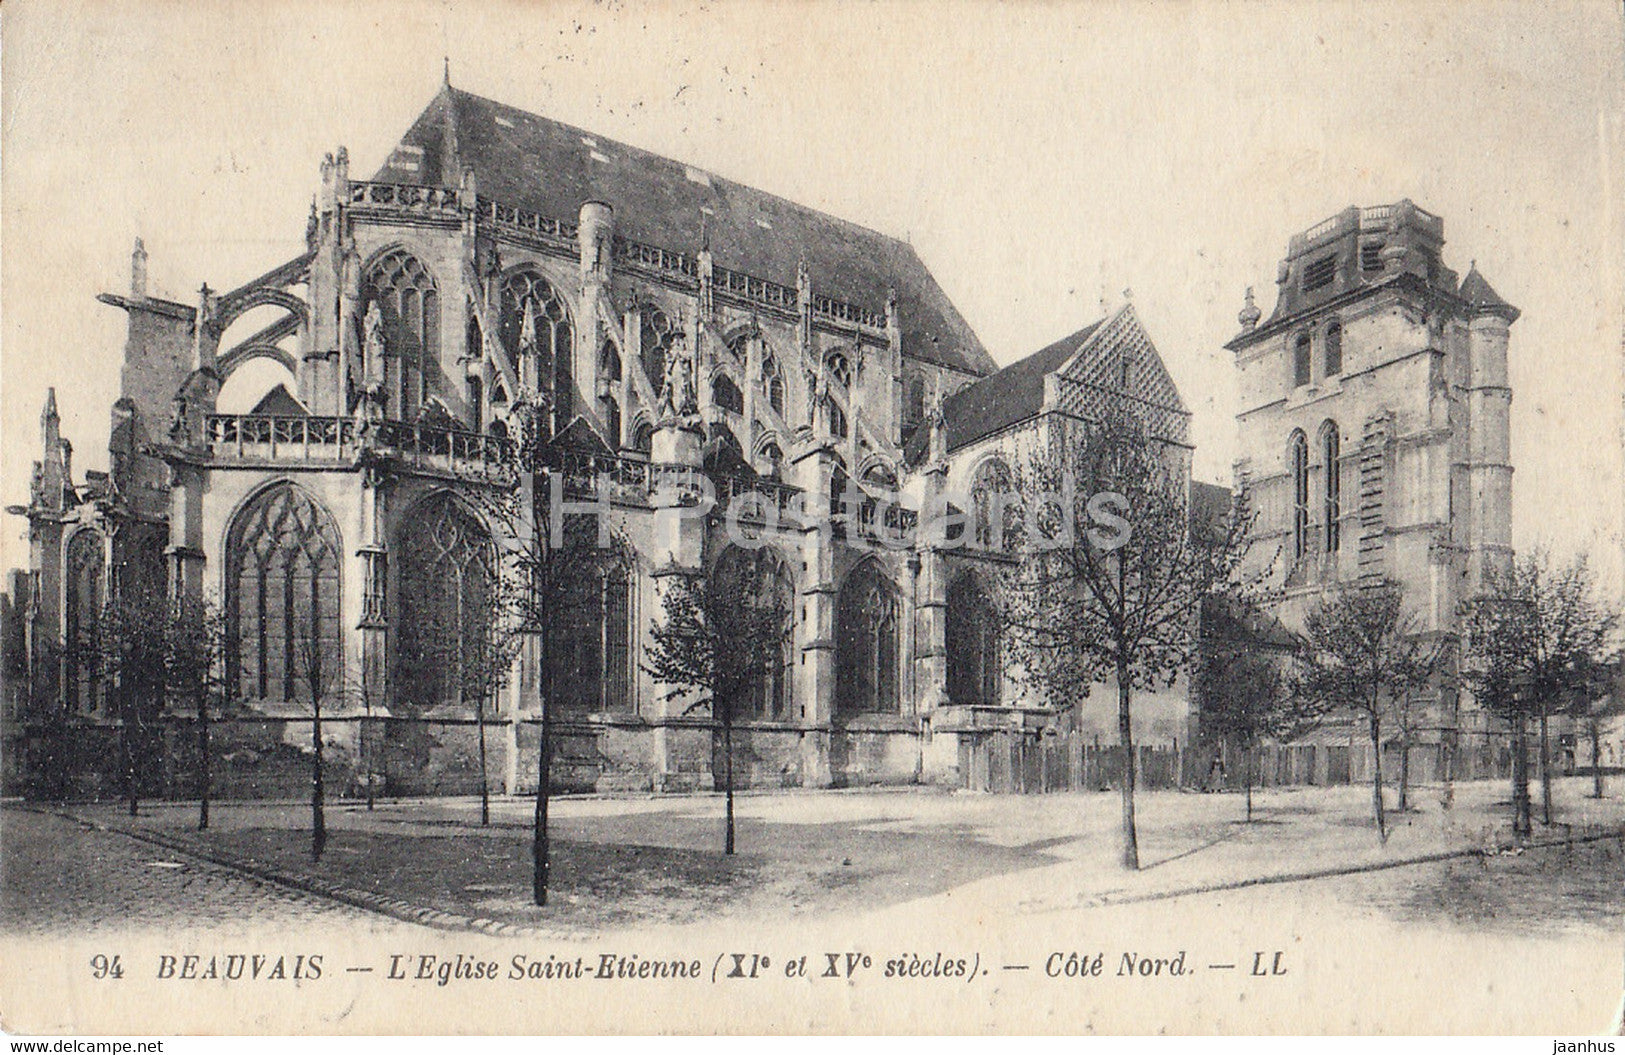 Beauvais - L'Eglise Saint Etienne - Cote Nord - church - 94 - old postcard - 1923 - France - used - JH Postcards